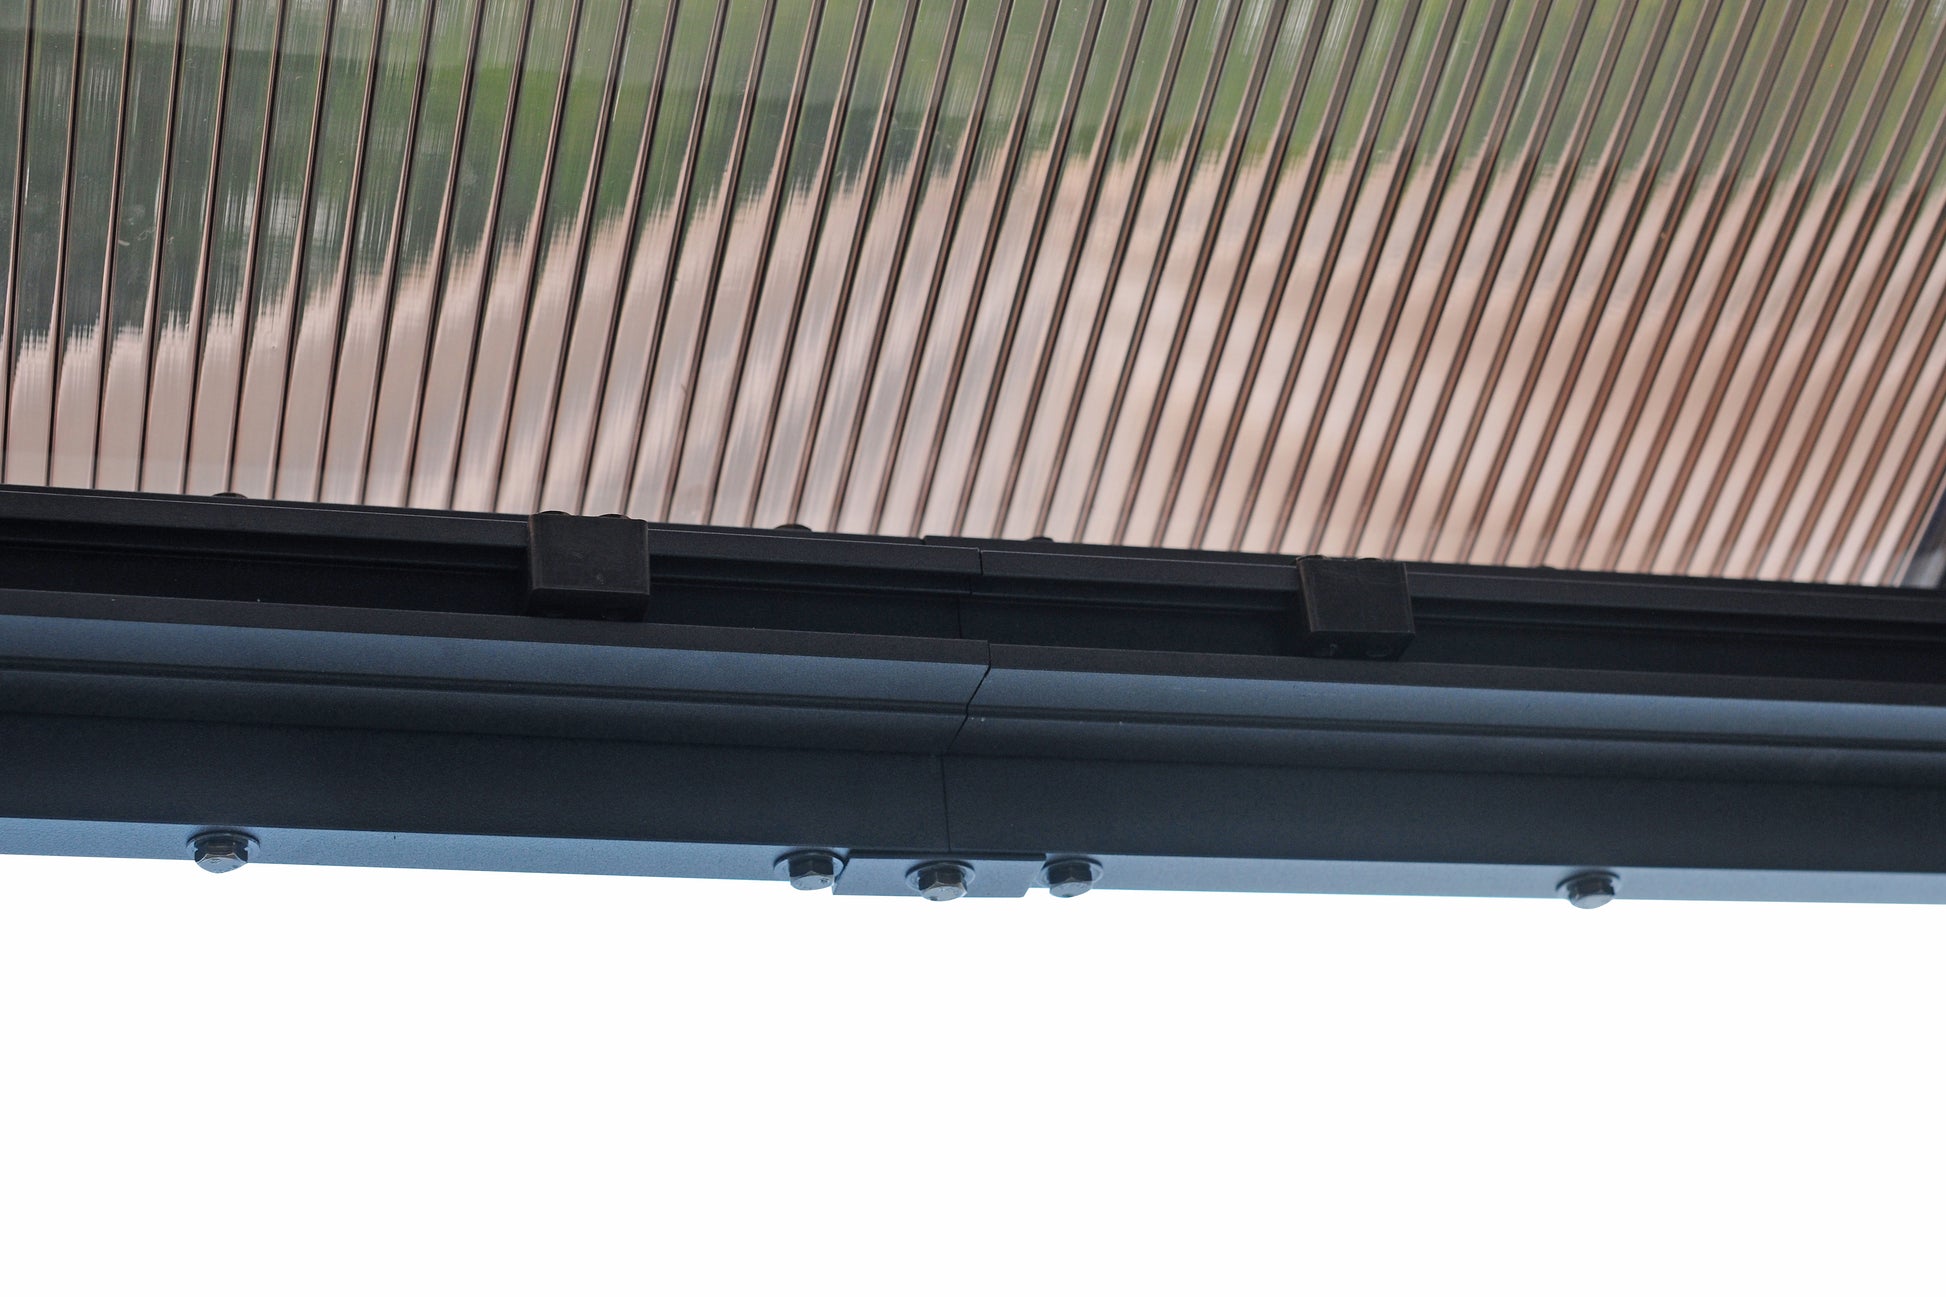 Elite Aluminium Black PC Garden Sunroom House 3x3.65m  With window screen Polycarbonate Board roof